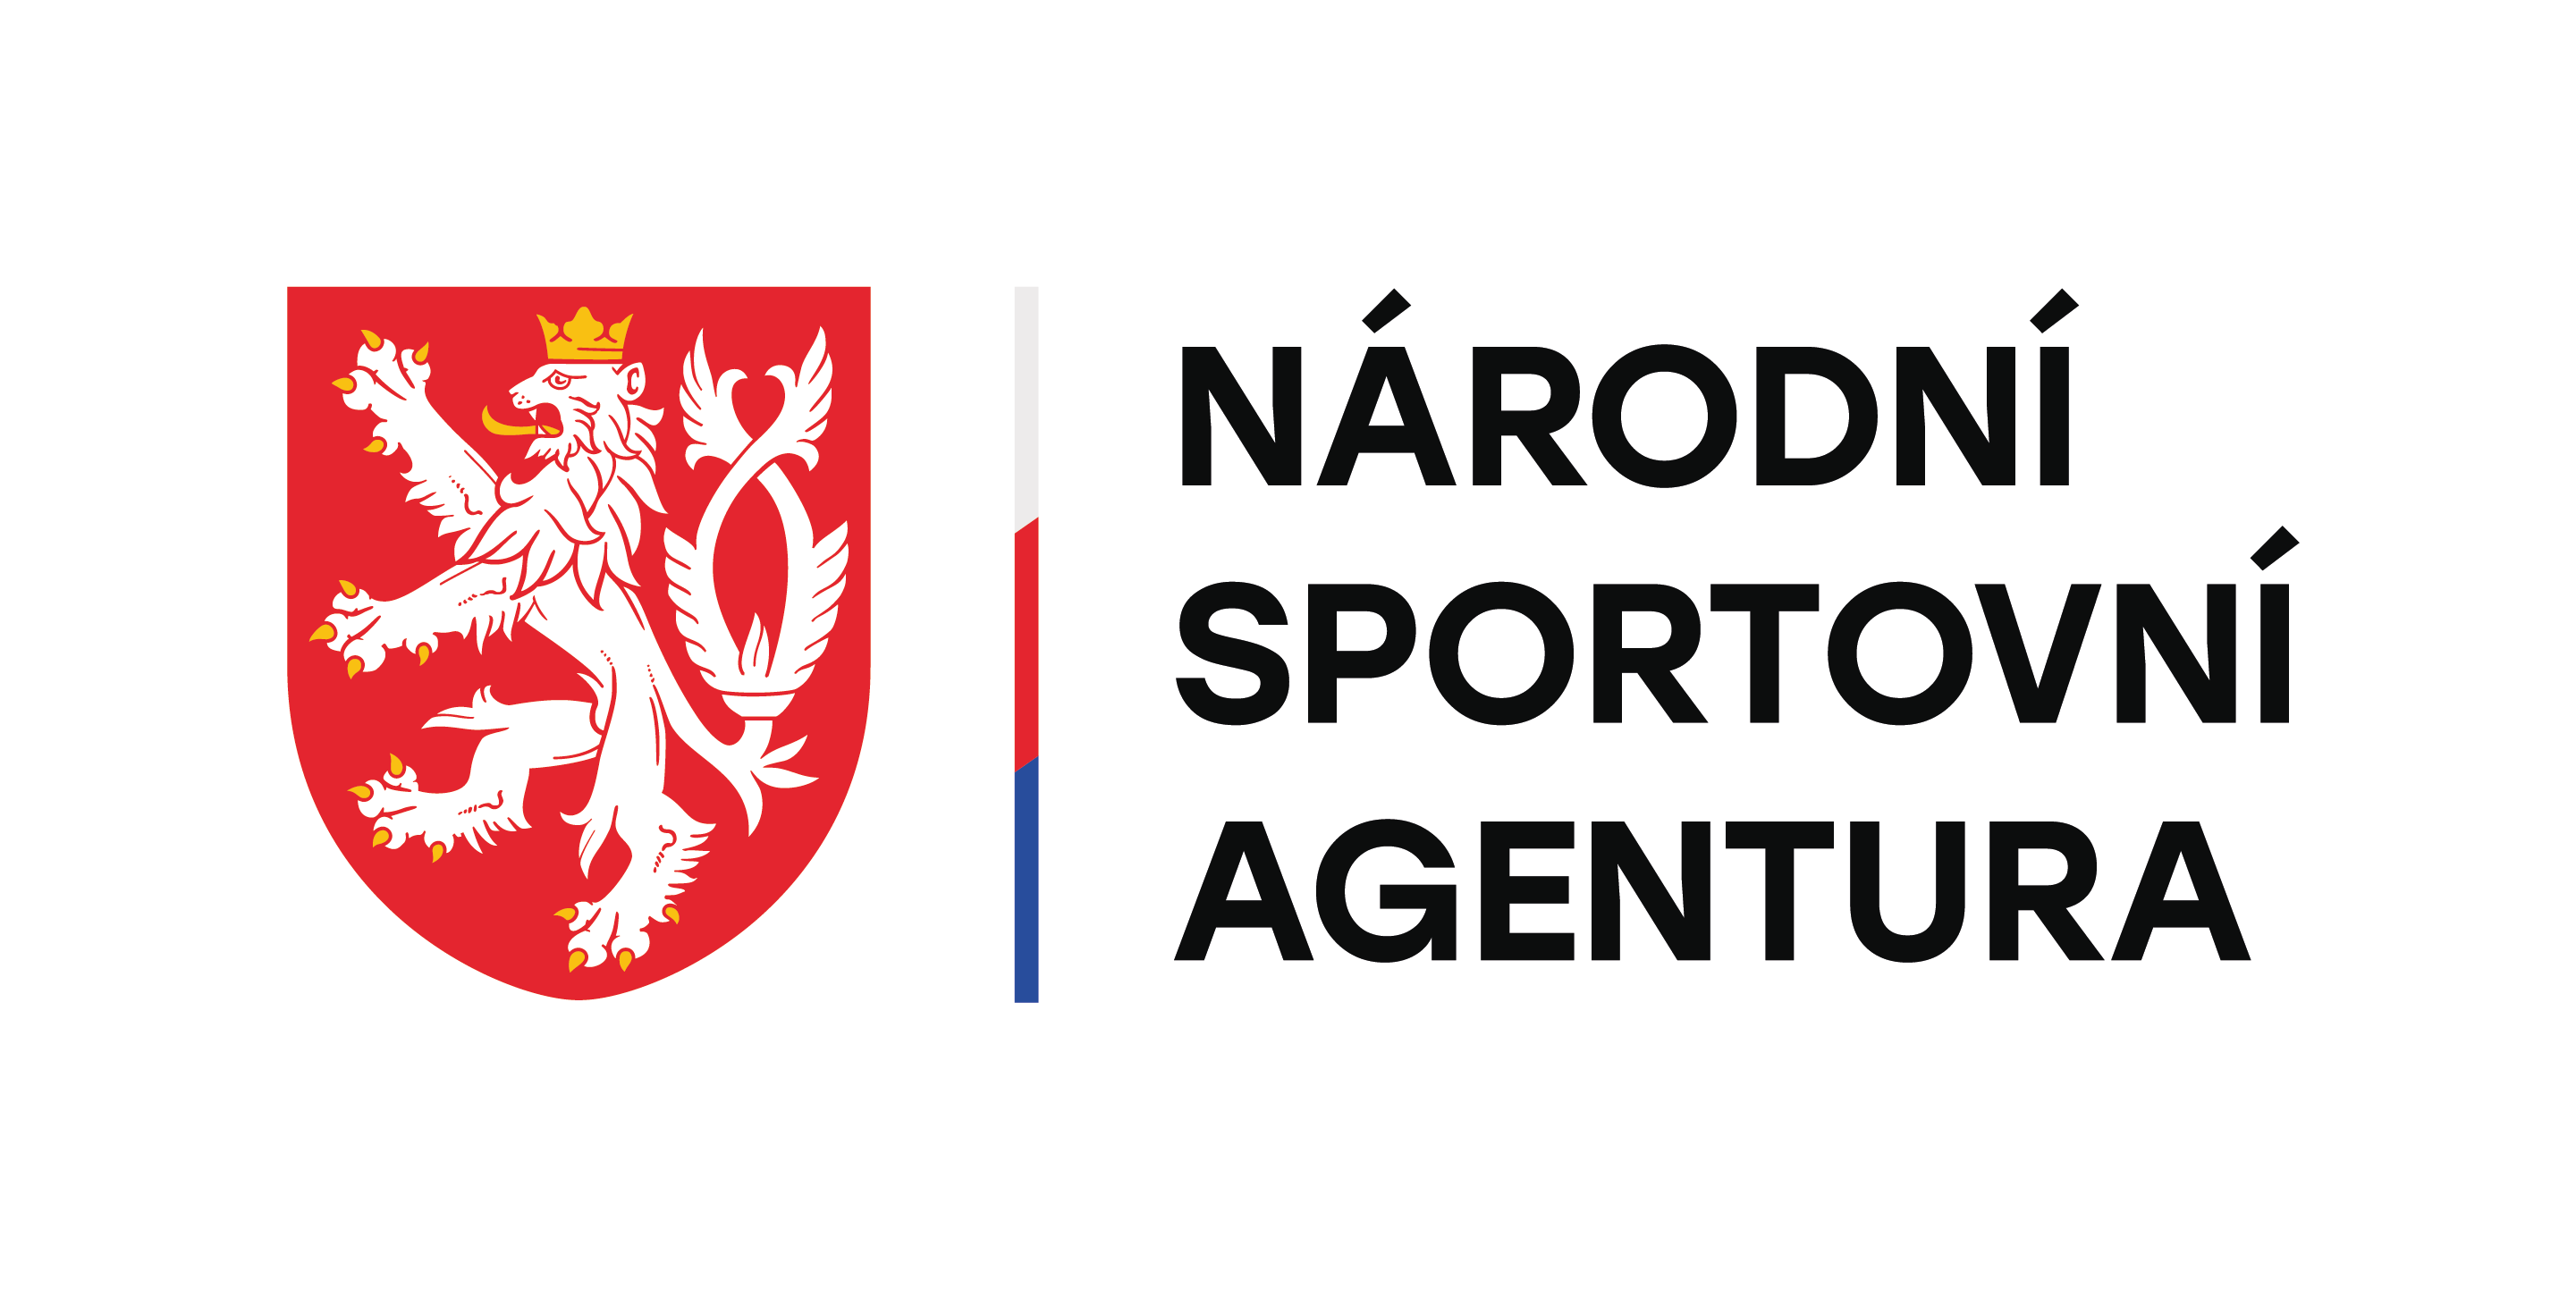 Narodni sportovni agentura logo cmyk